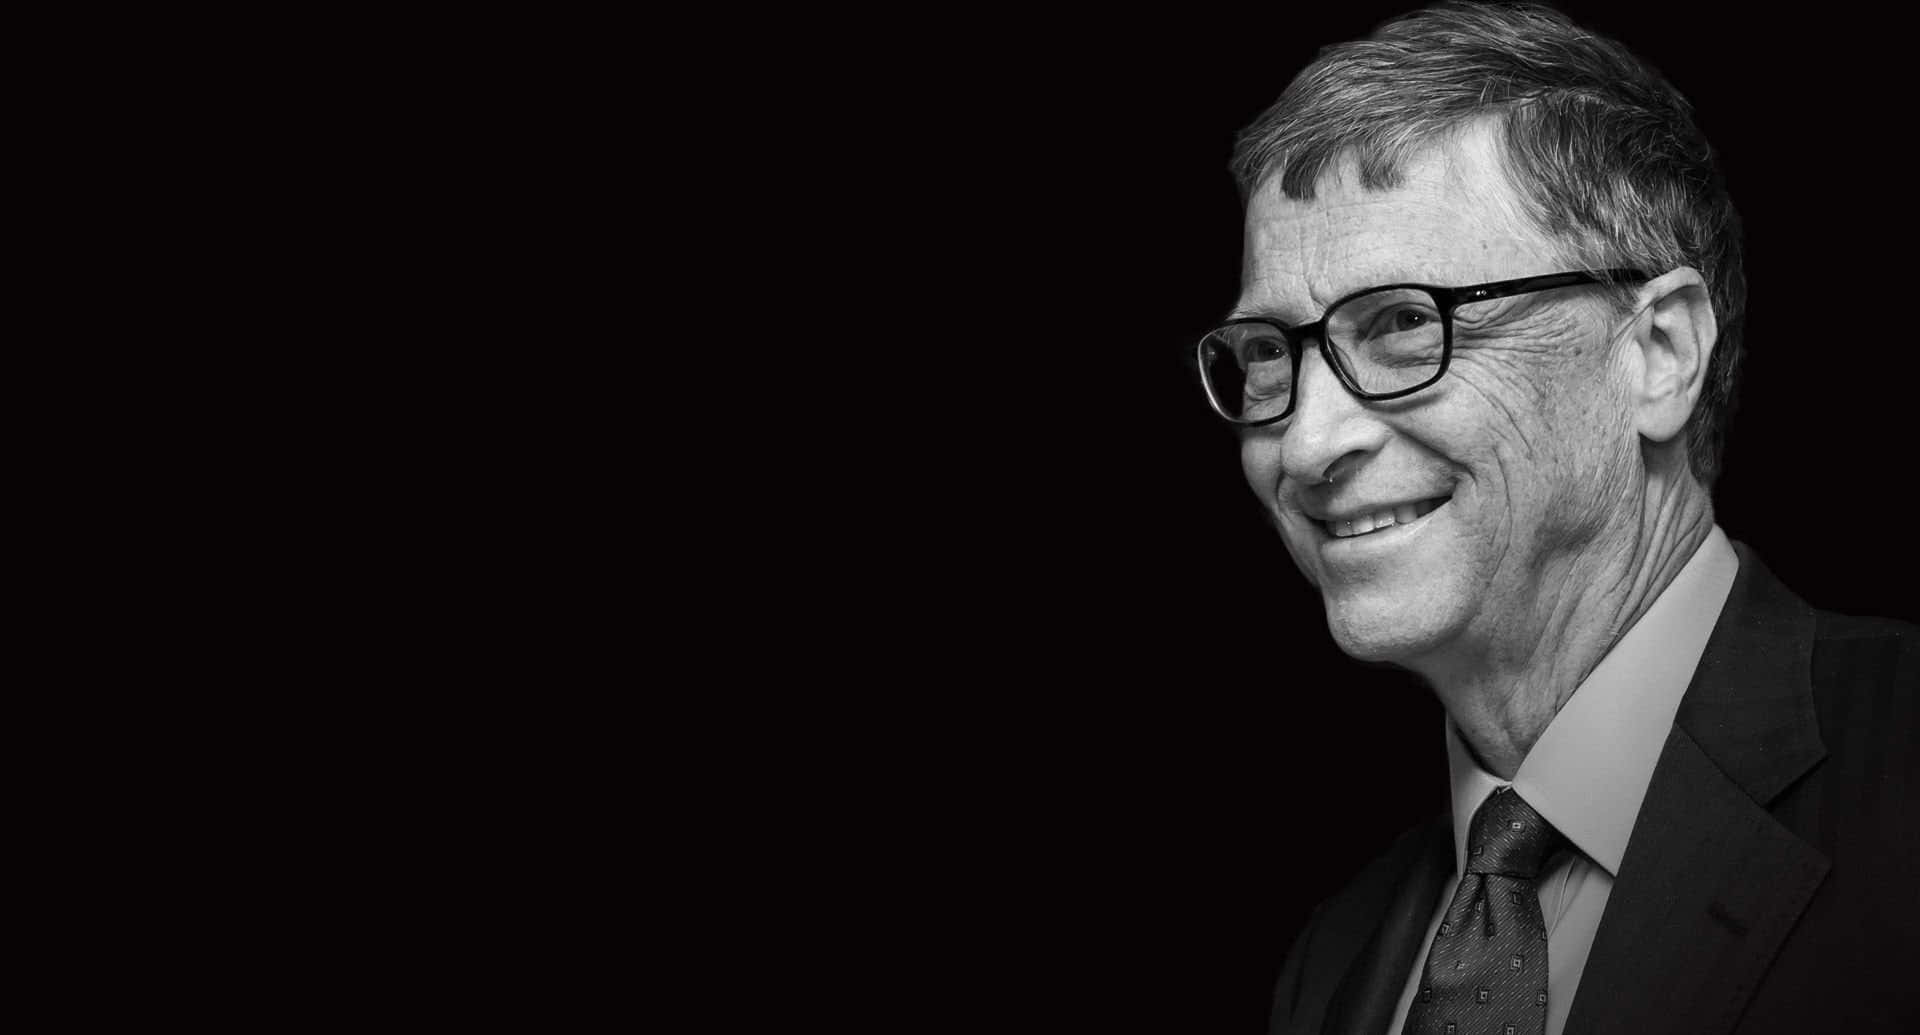 Bill Gates | Innovative Technology Pioneer